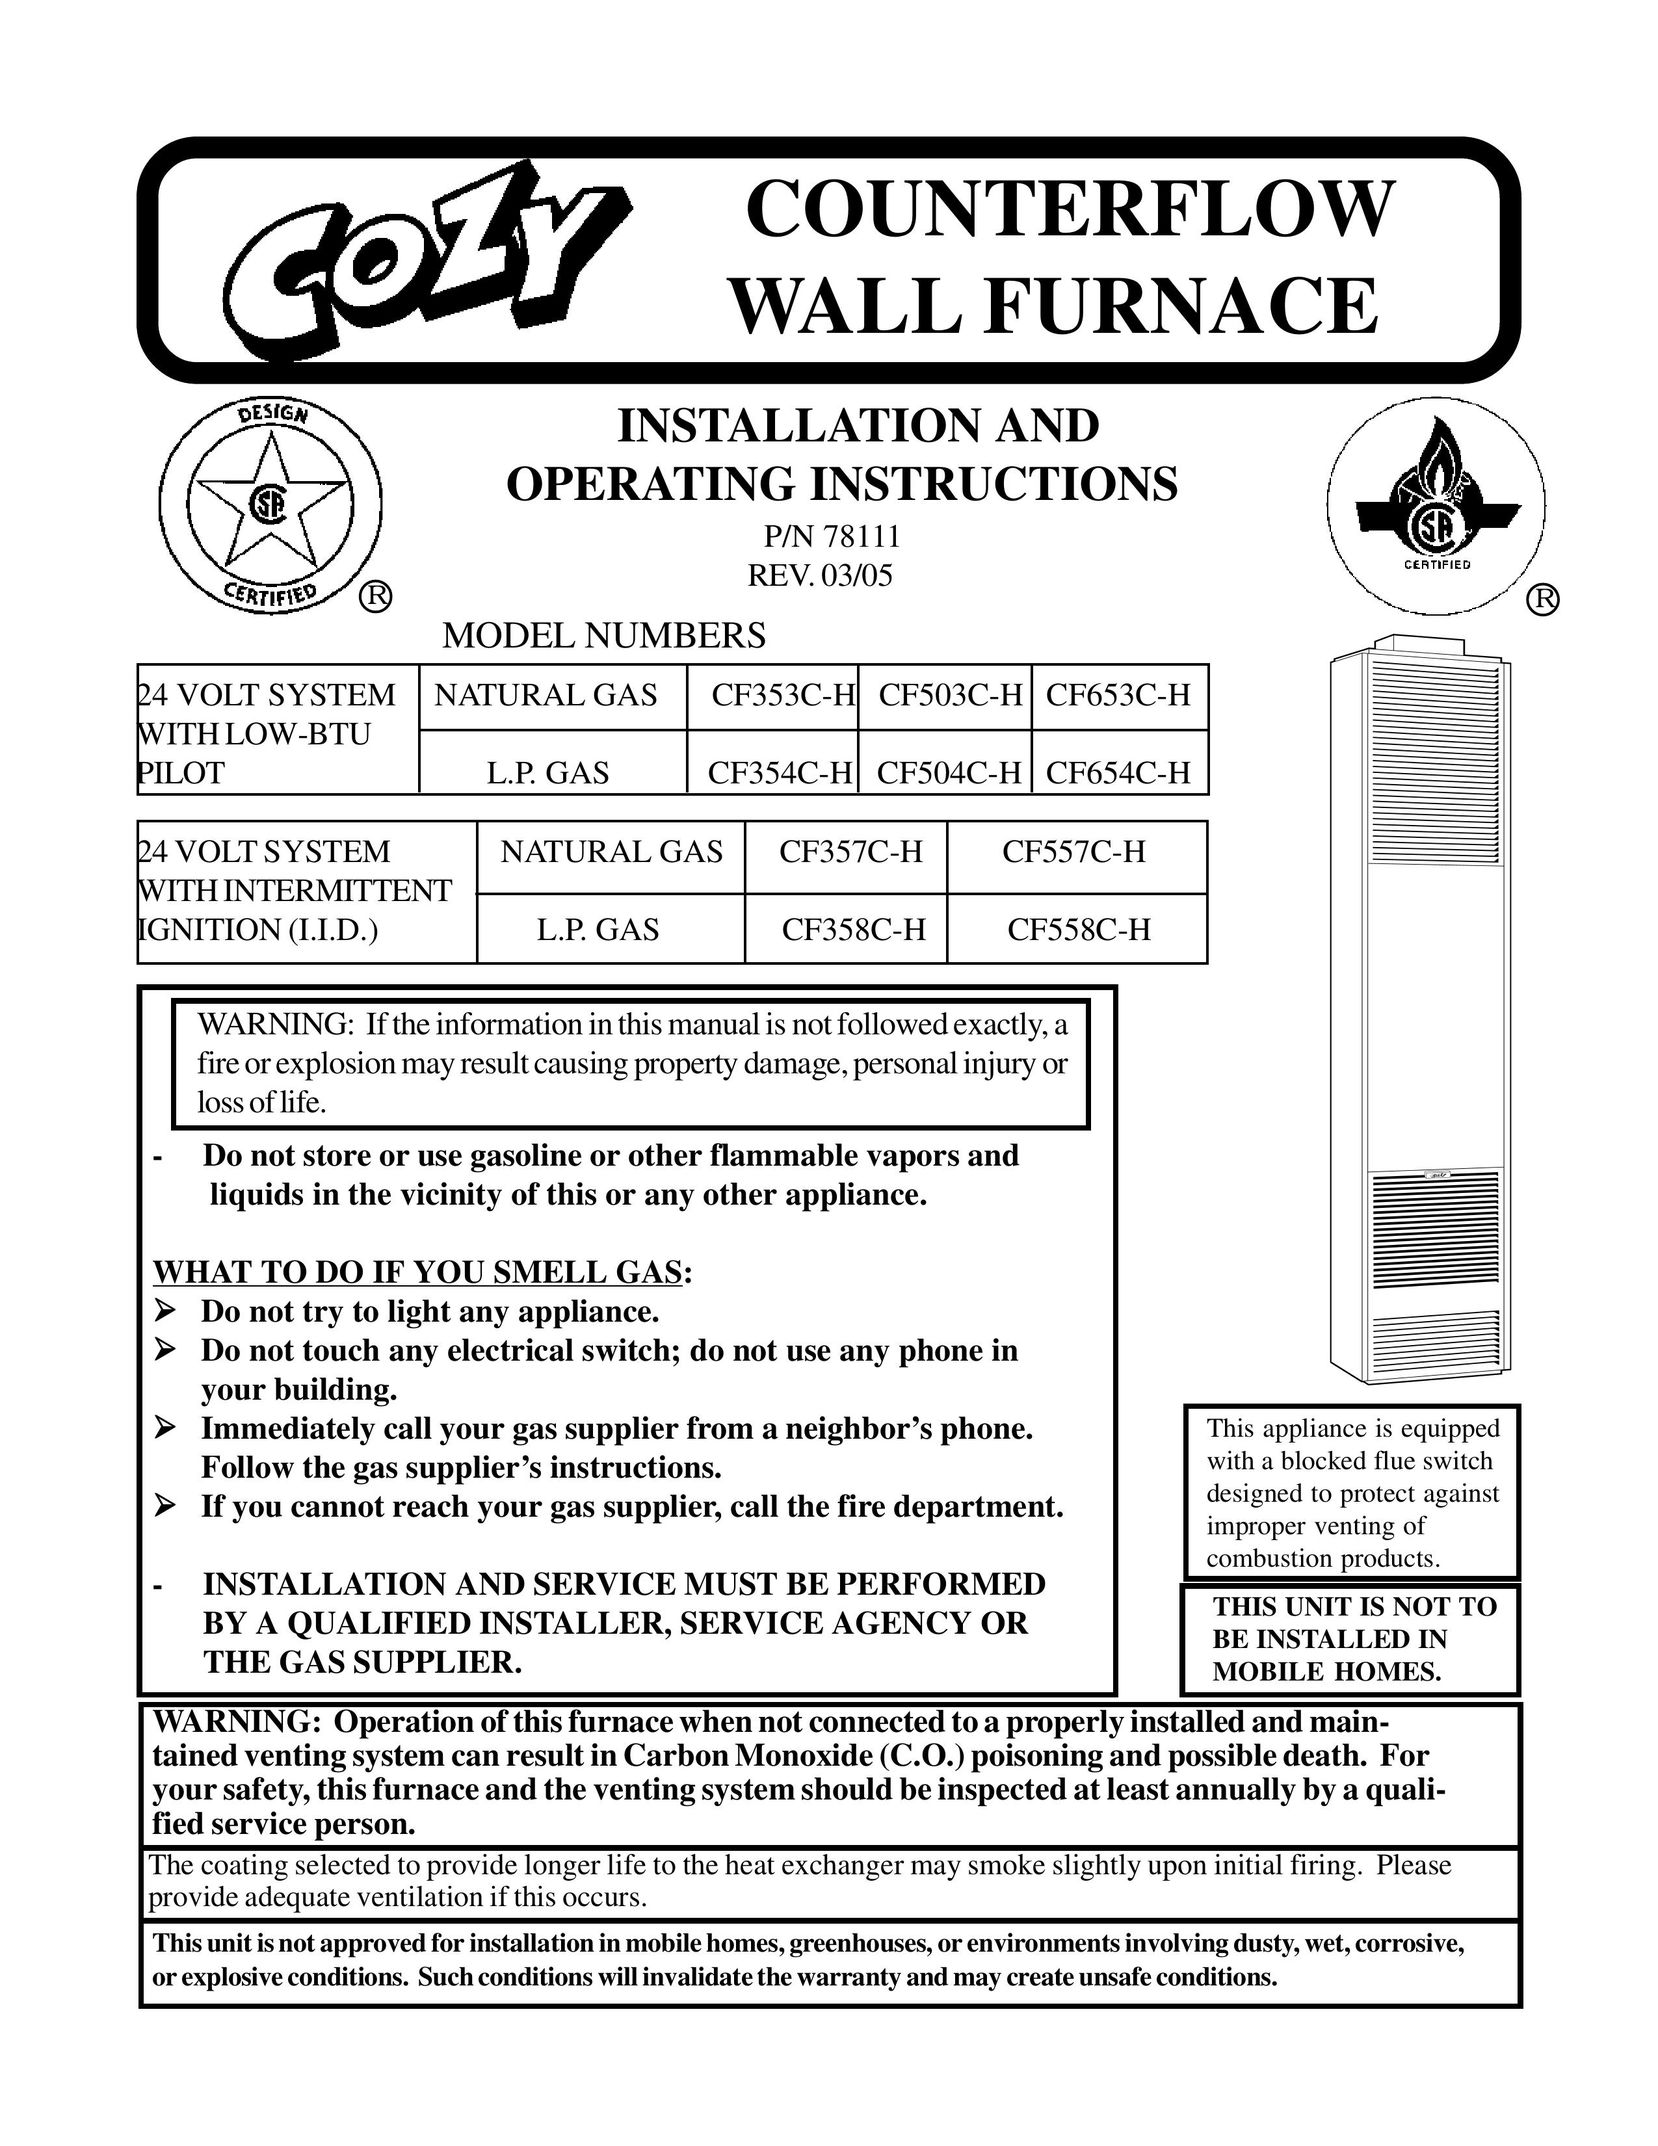 Louisville Tin and Stove CF504C-H Furnace User Manual